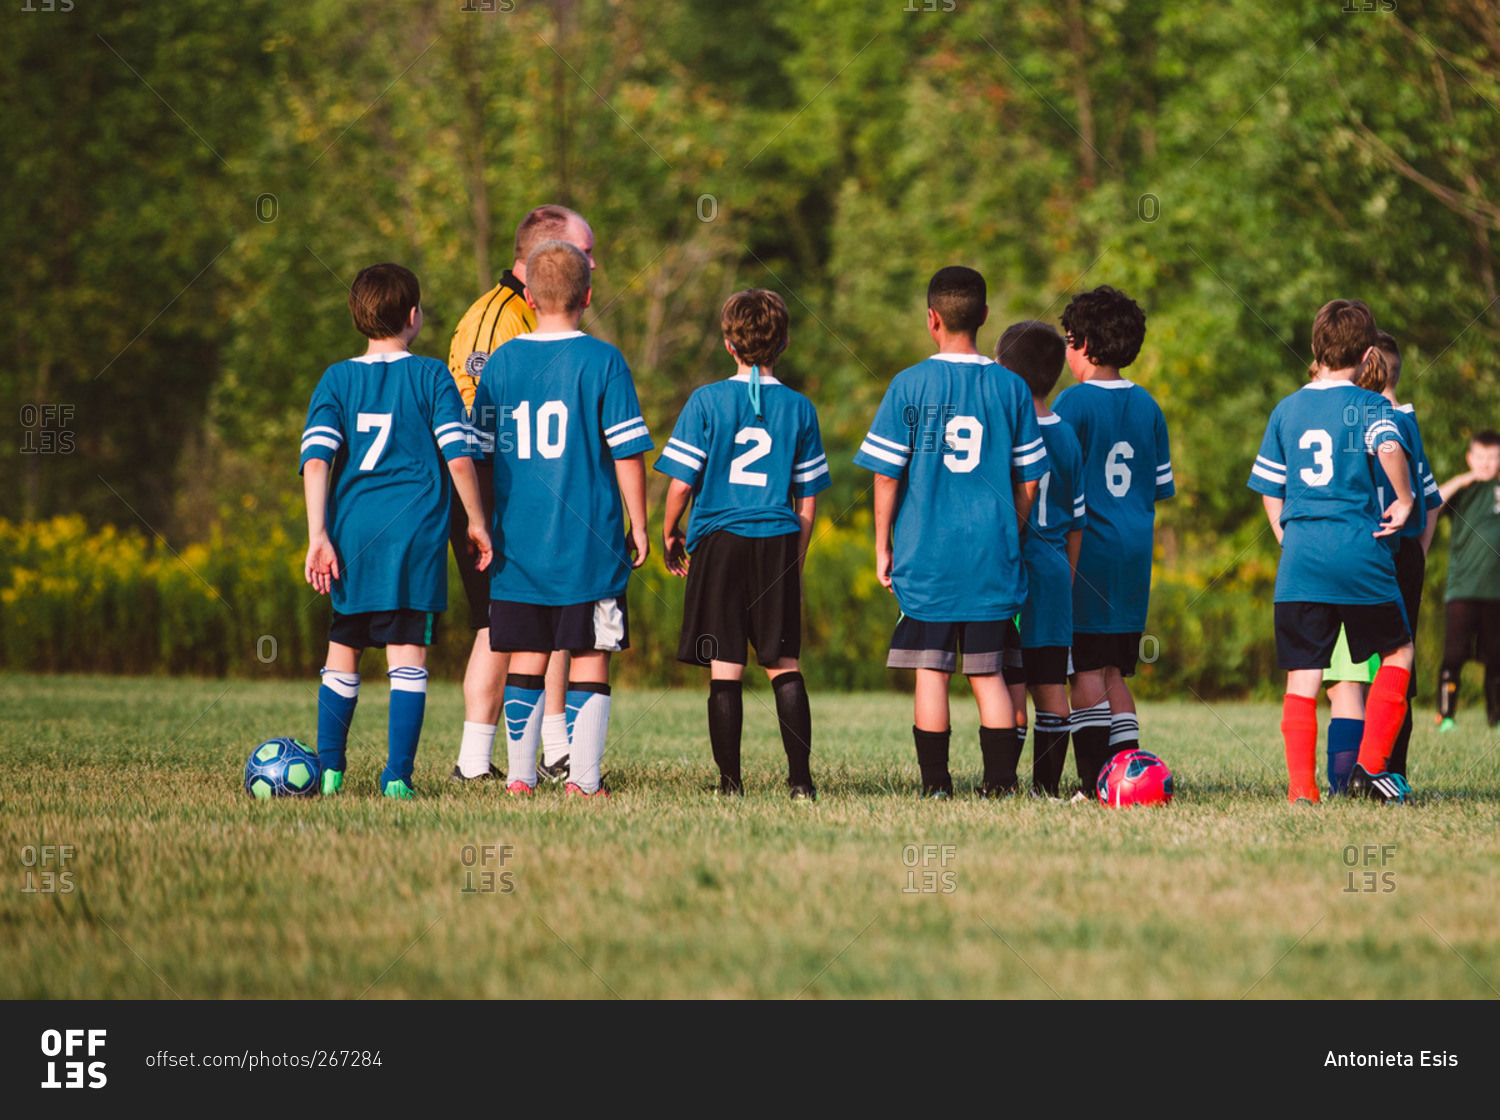 A boys soccer team gathers around their coach